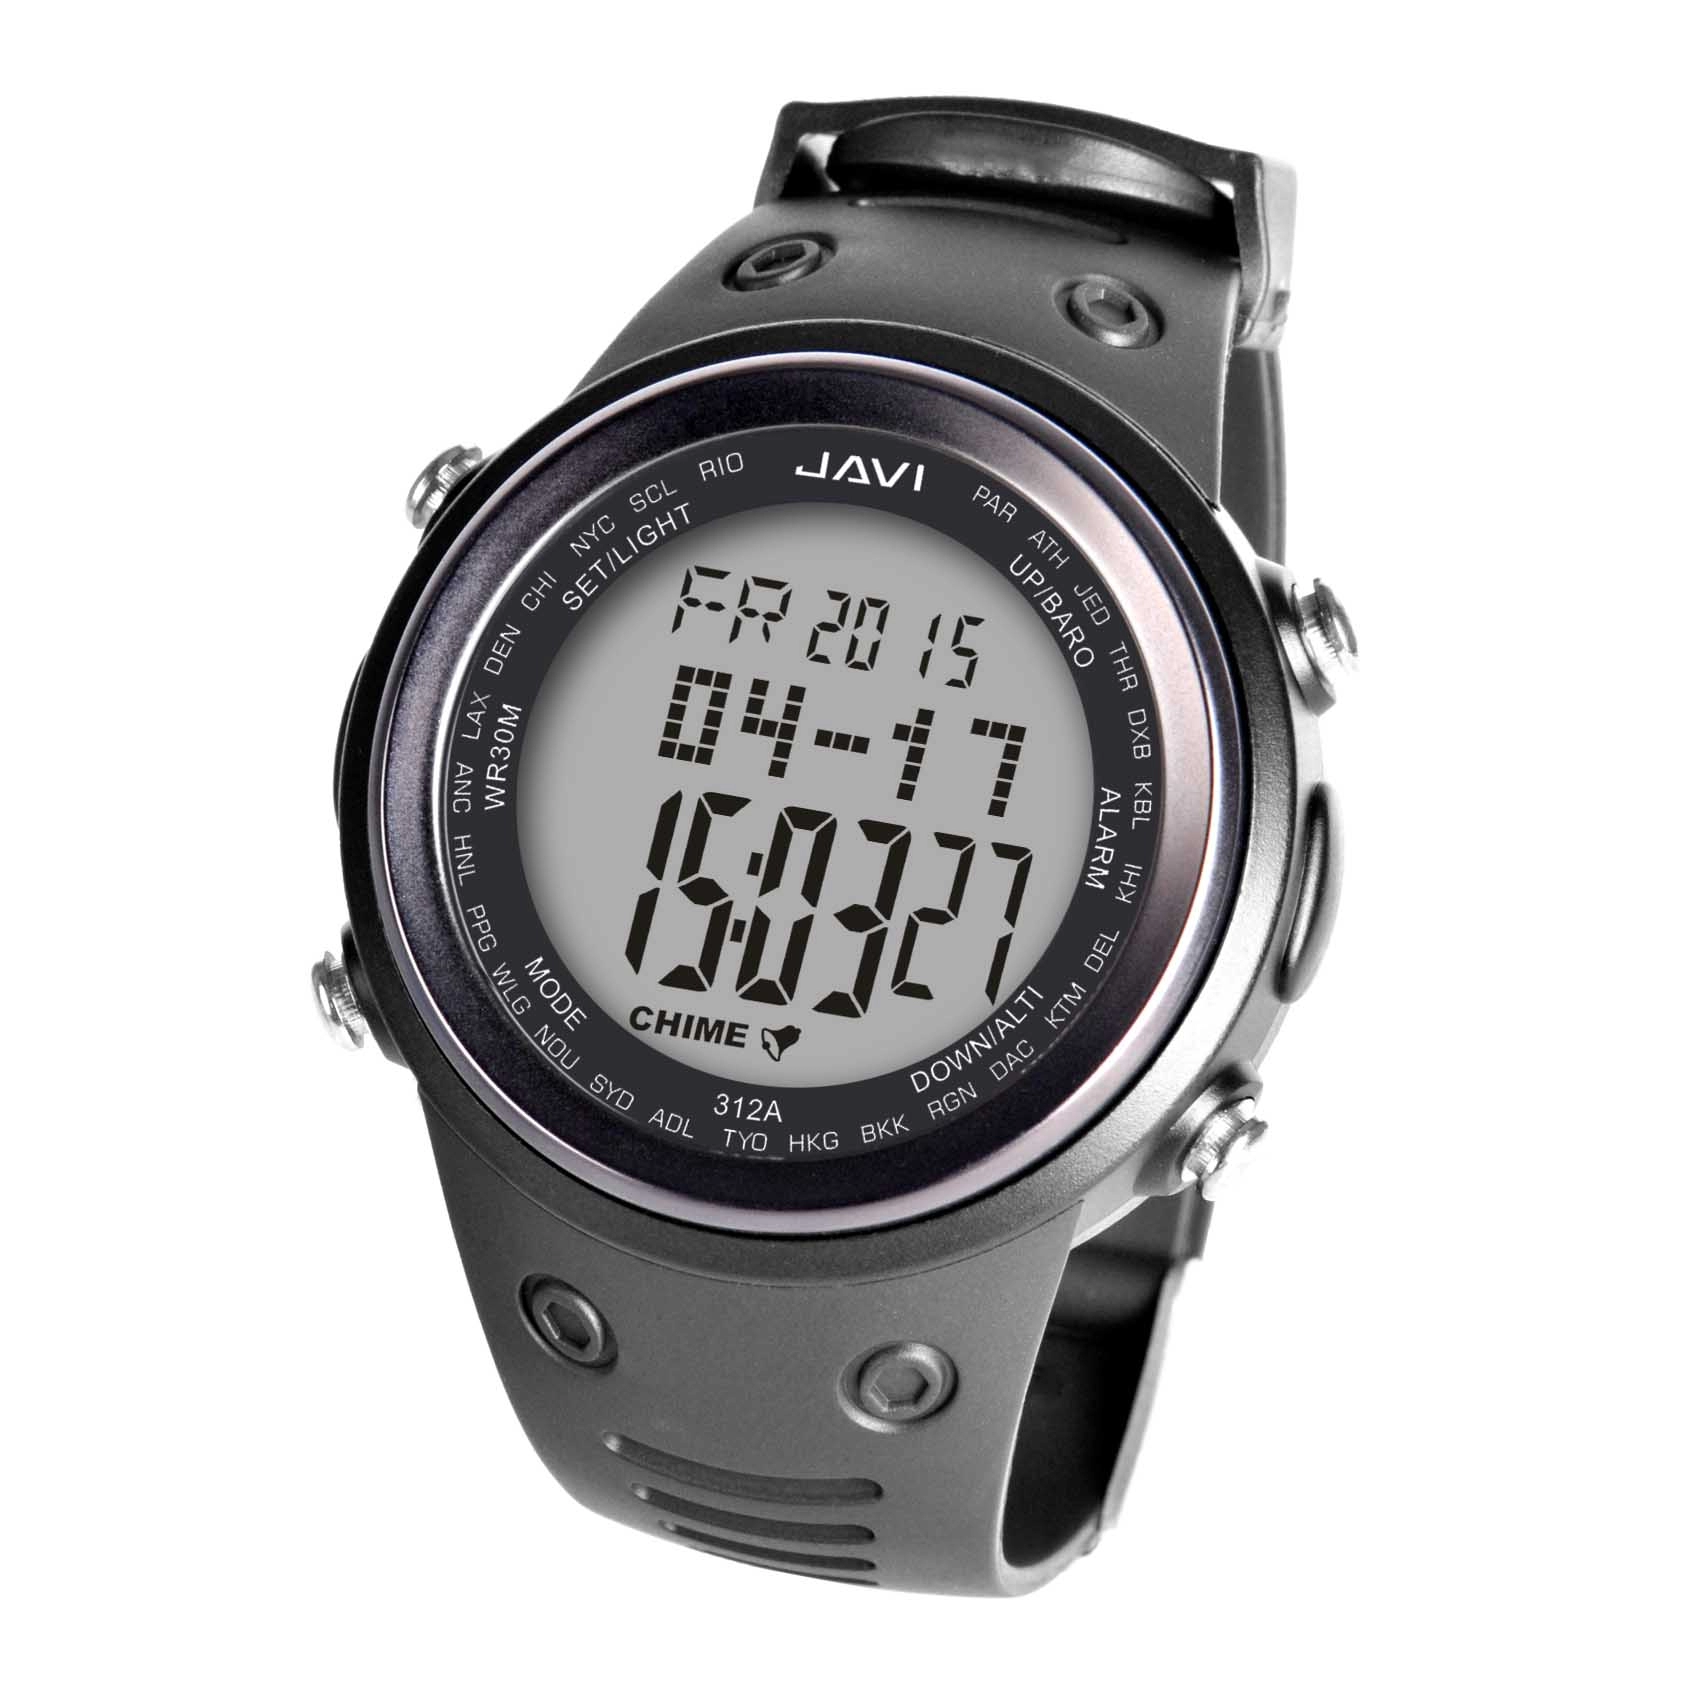 Altitude & Temperature Multi-function Mens Countdown Wrist Watch